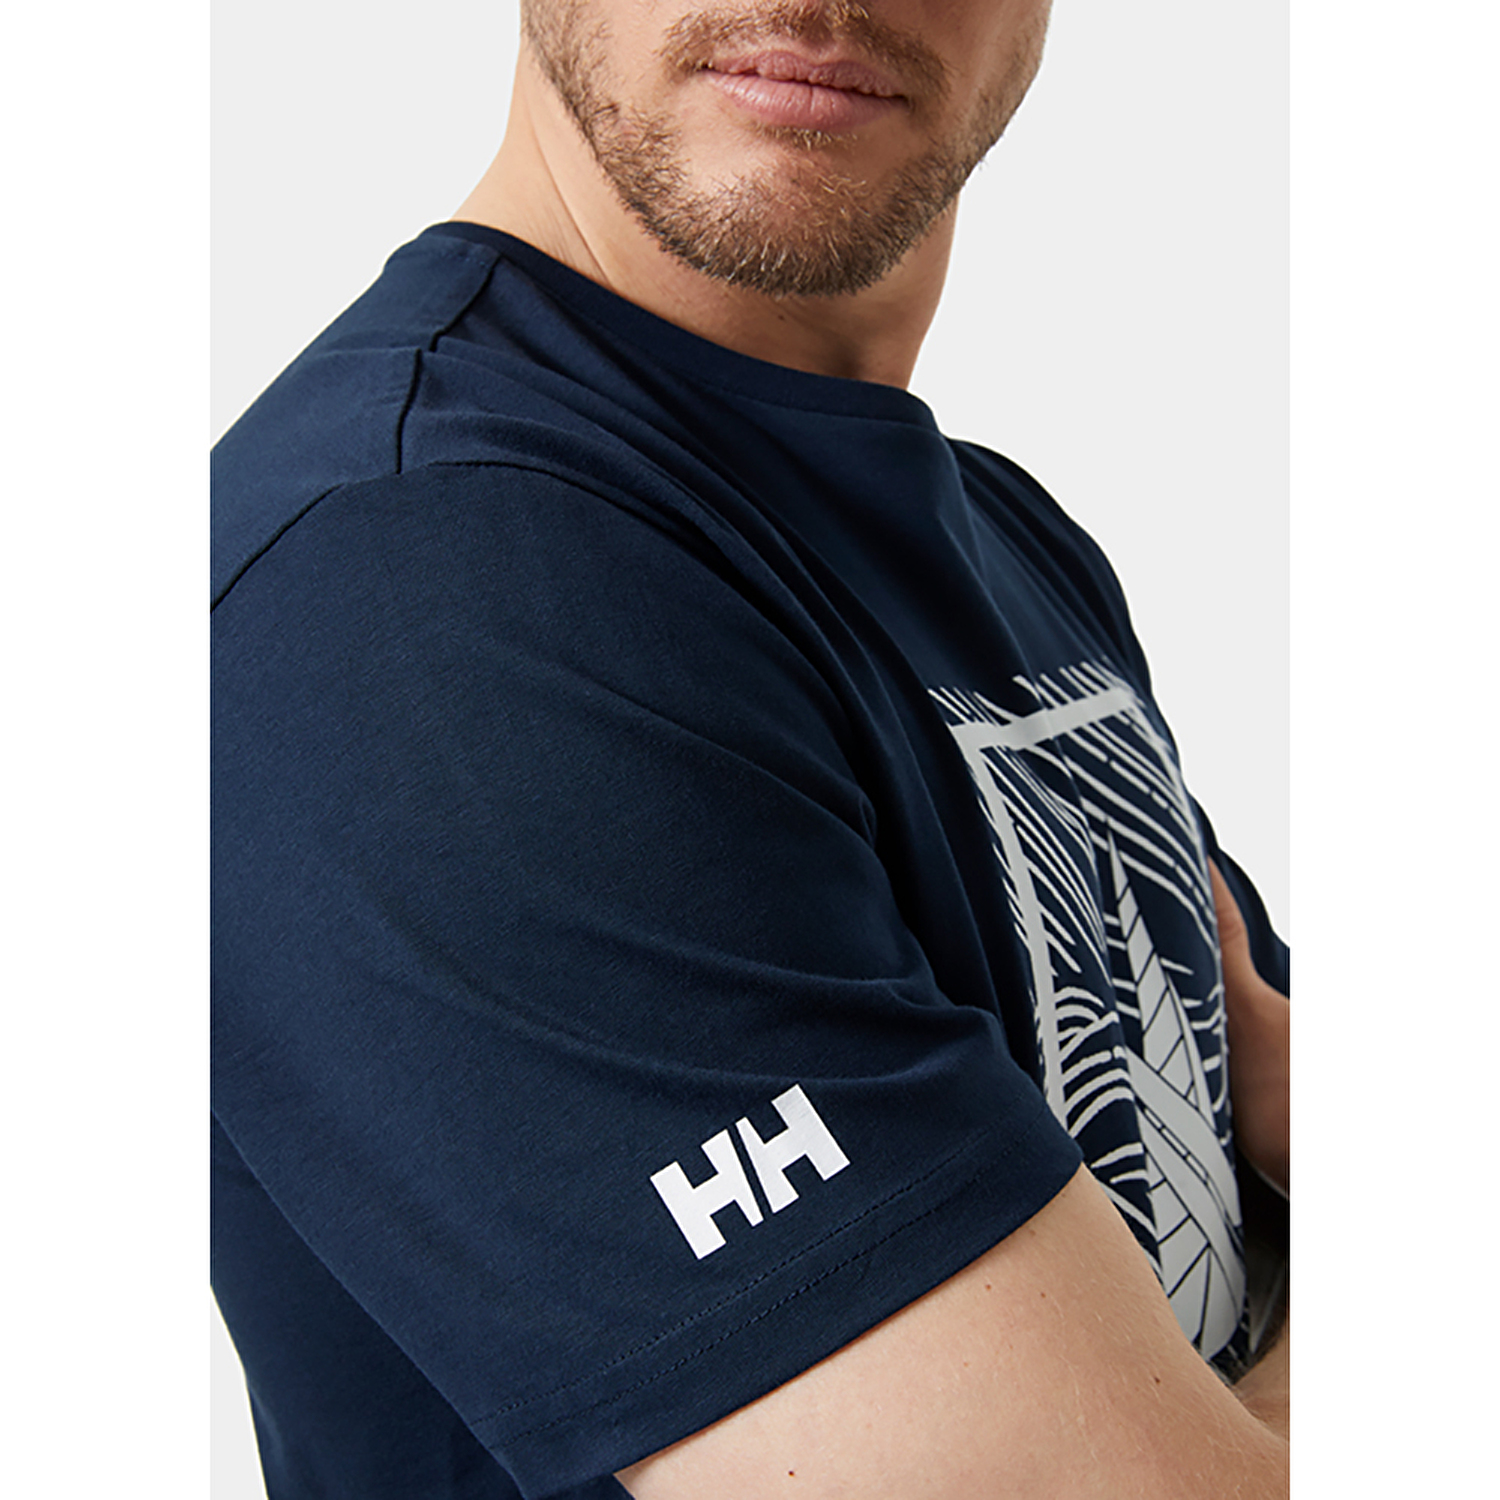 Helly Hansen Shoreline 2.0 Erkek Kısa Kollu T-Shirt